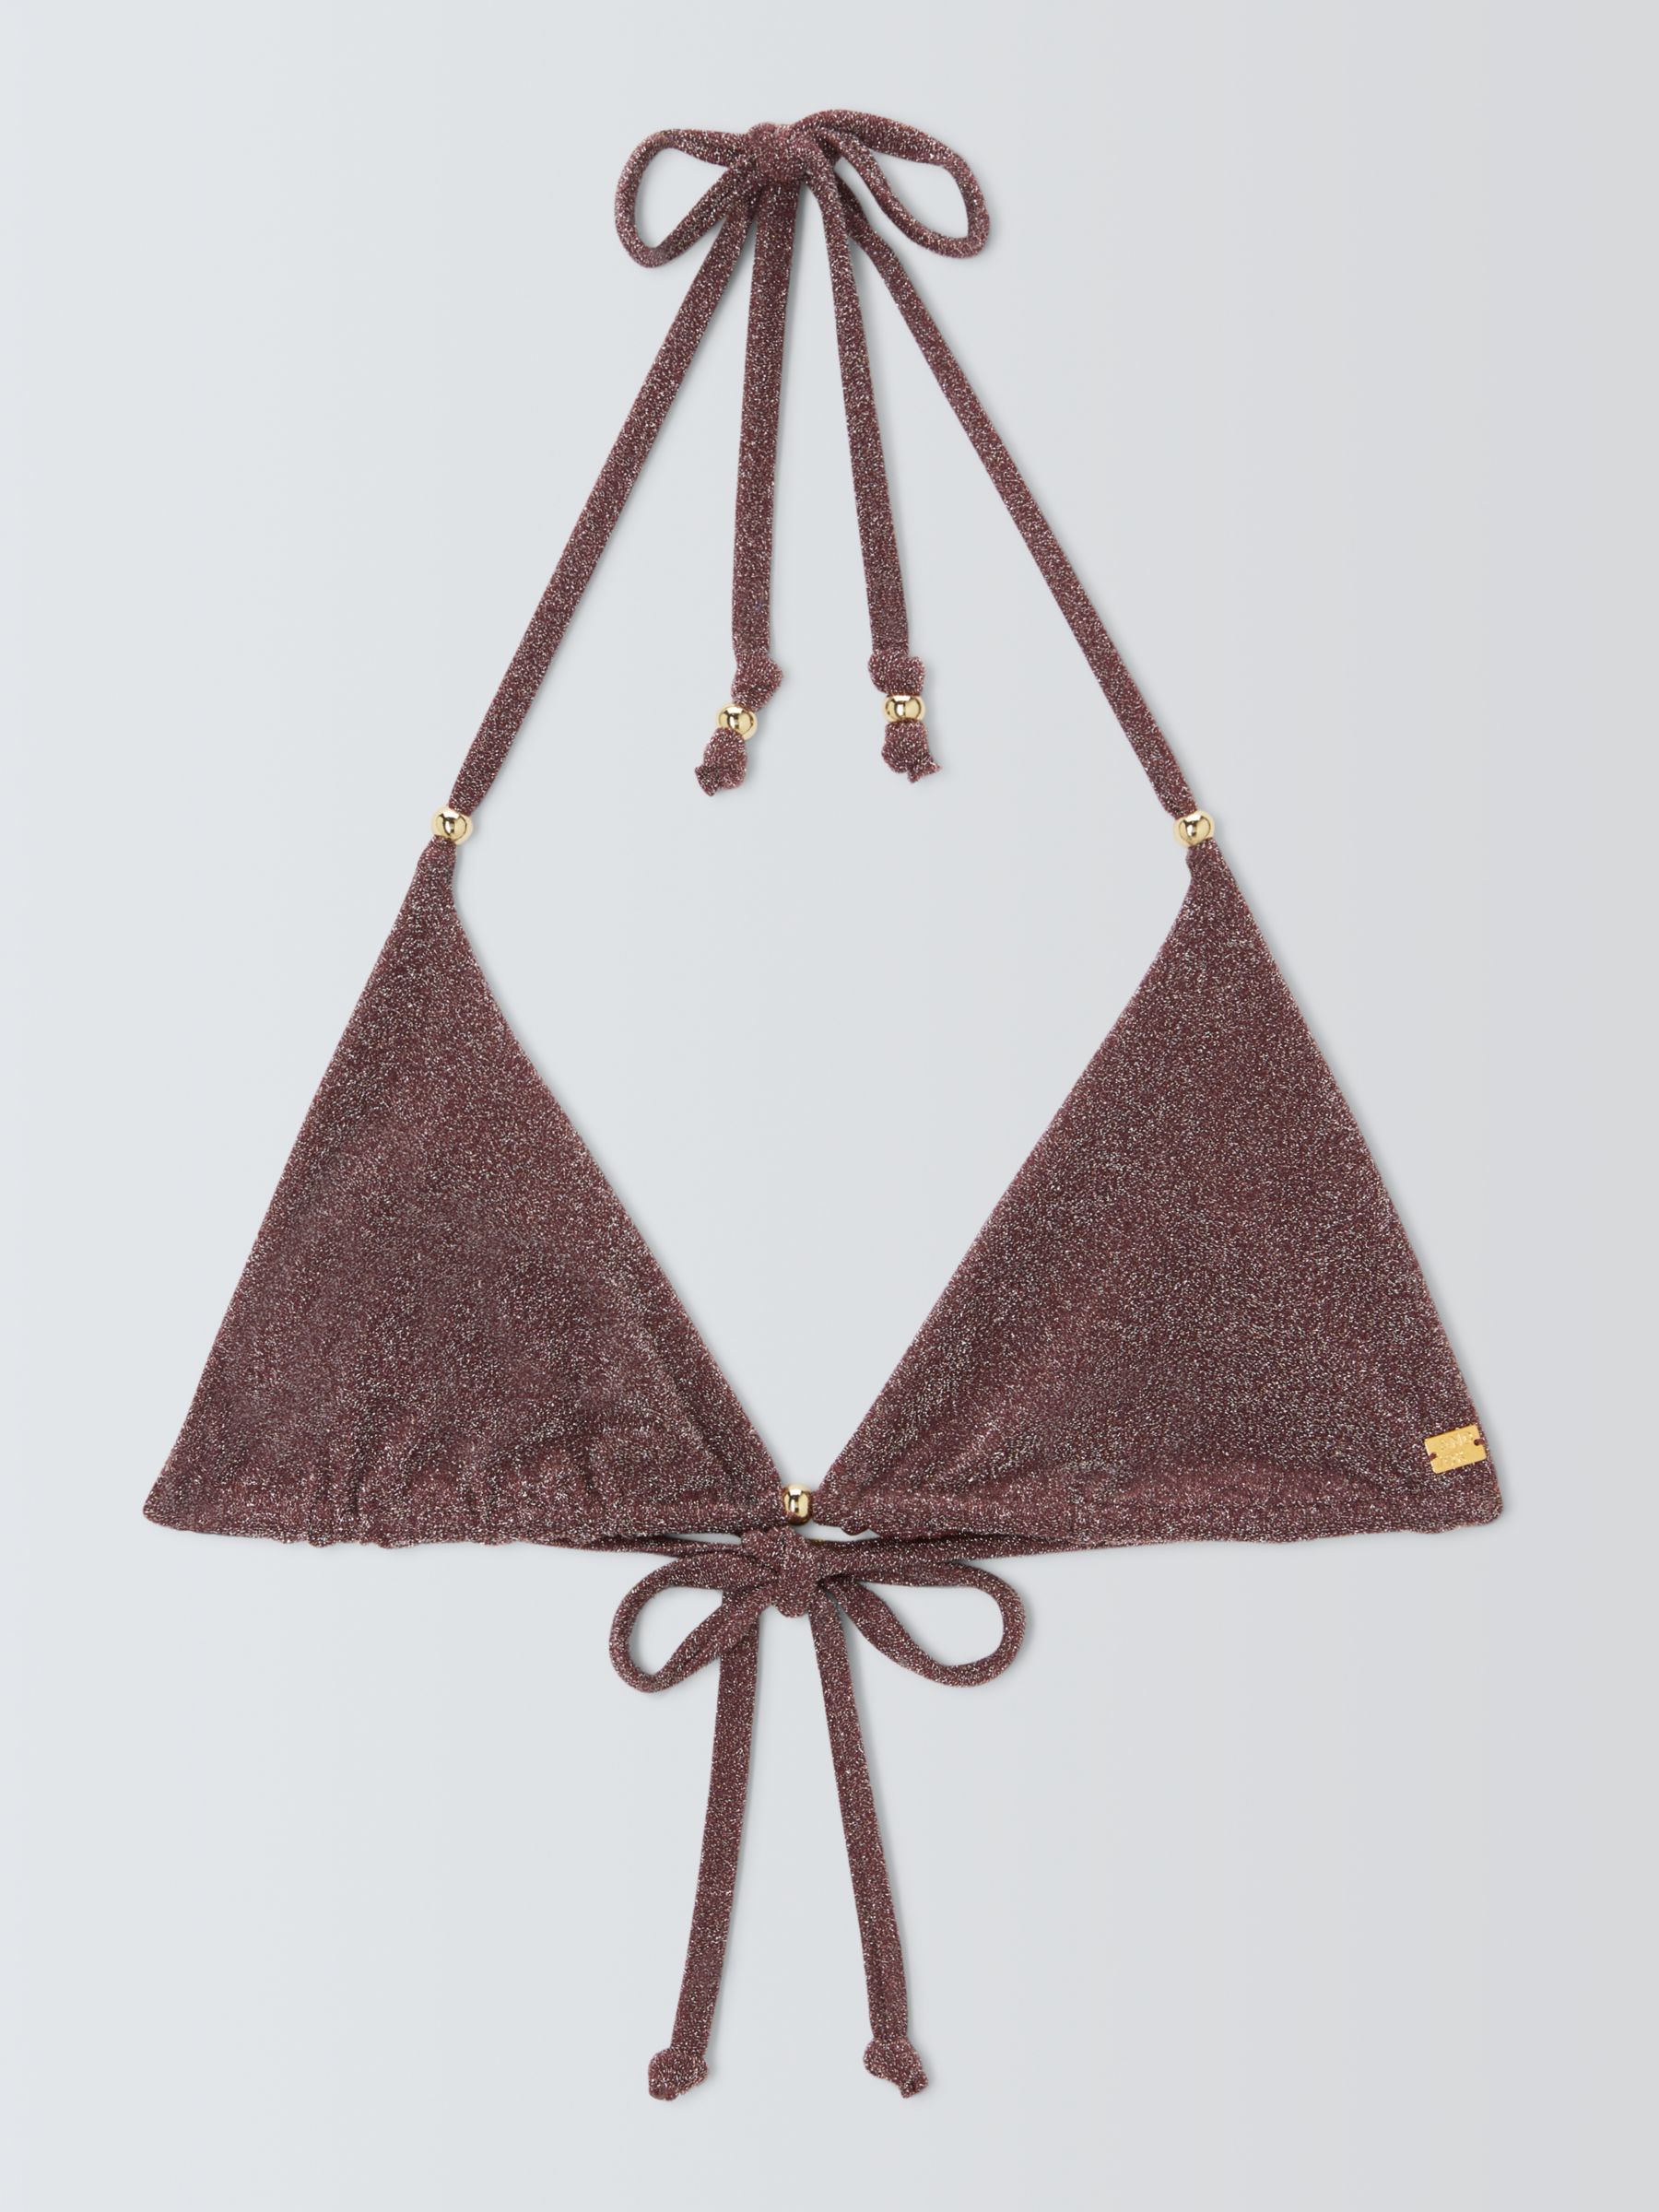 AND/OR Shimmer Triangle Bikini Top, Chocolate, 8